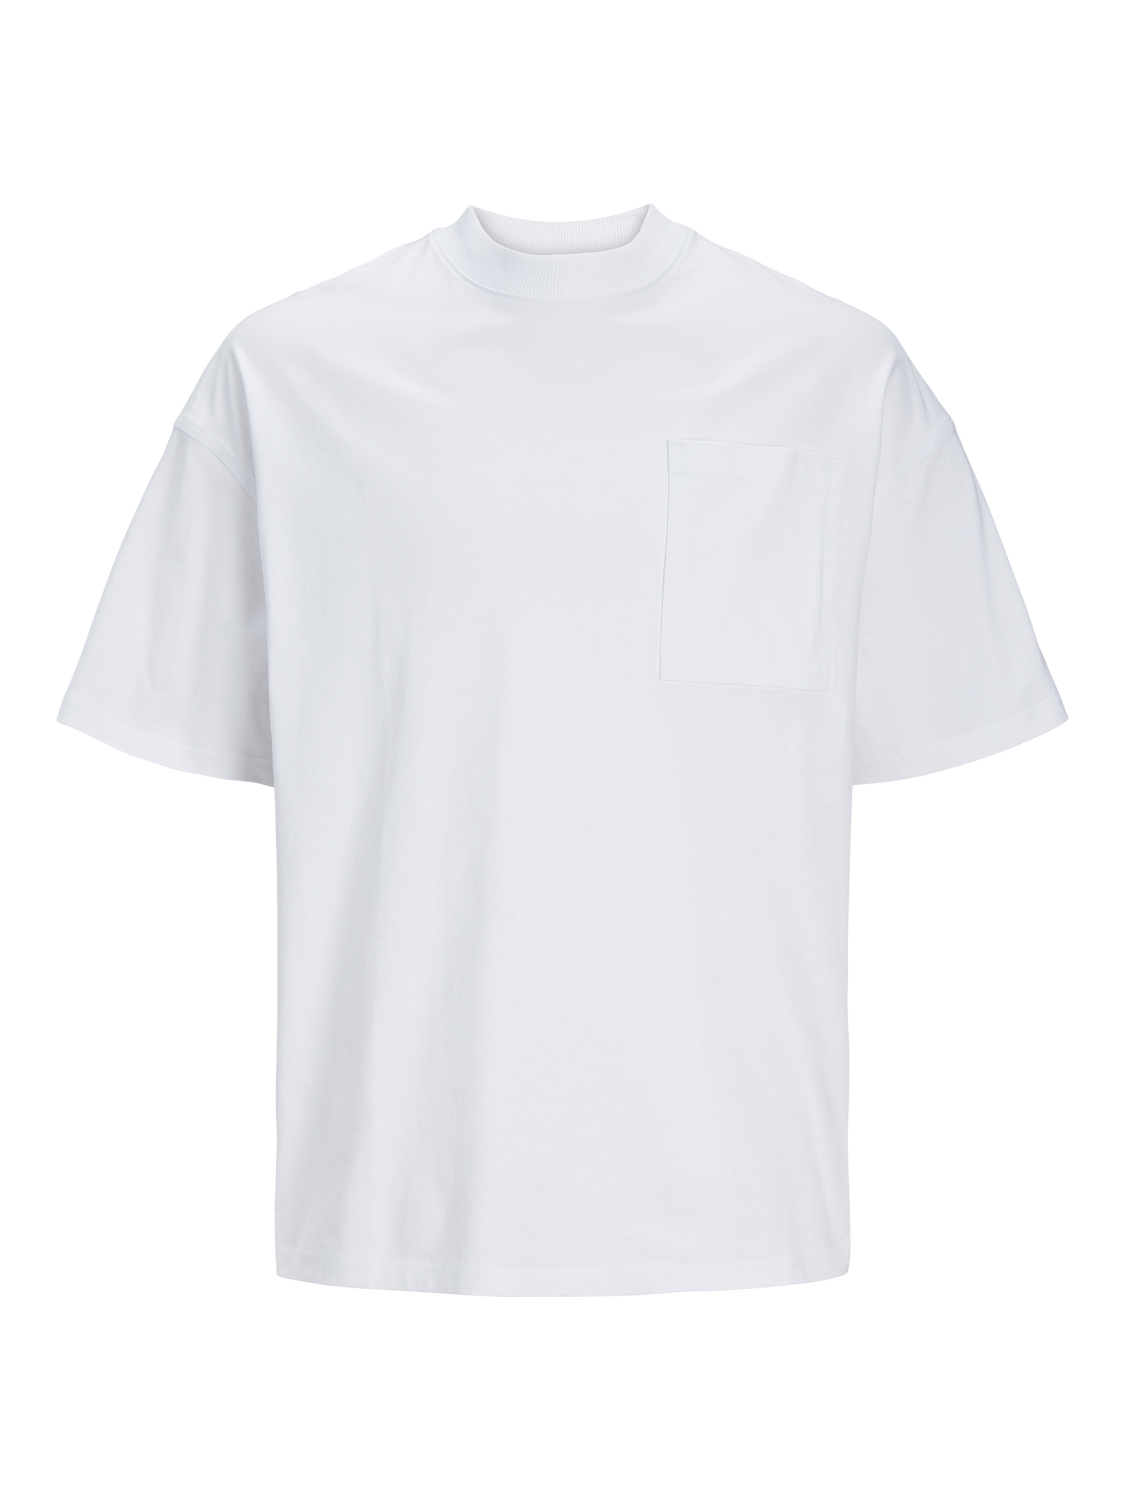 Jack & Jones Oversize Fit Round Neck T-Shirt -White - 12253478